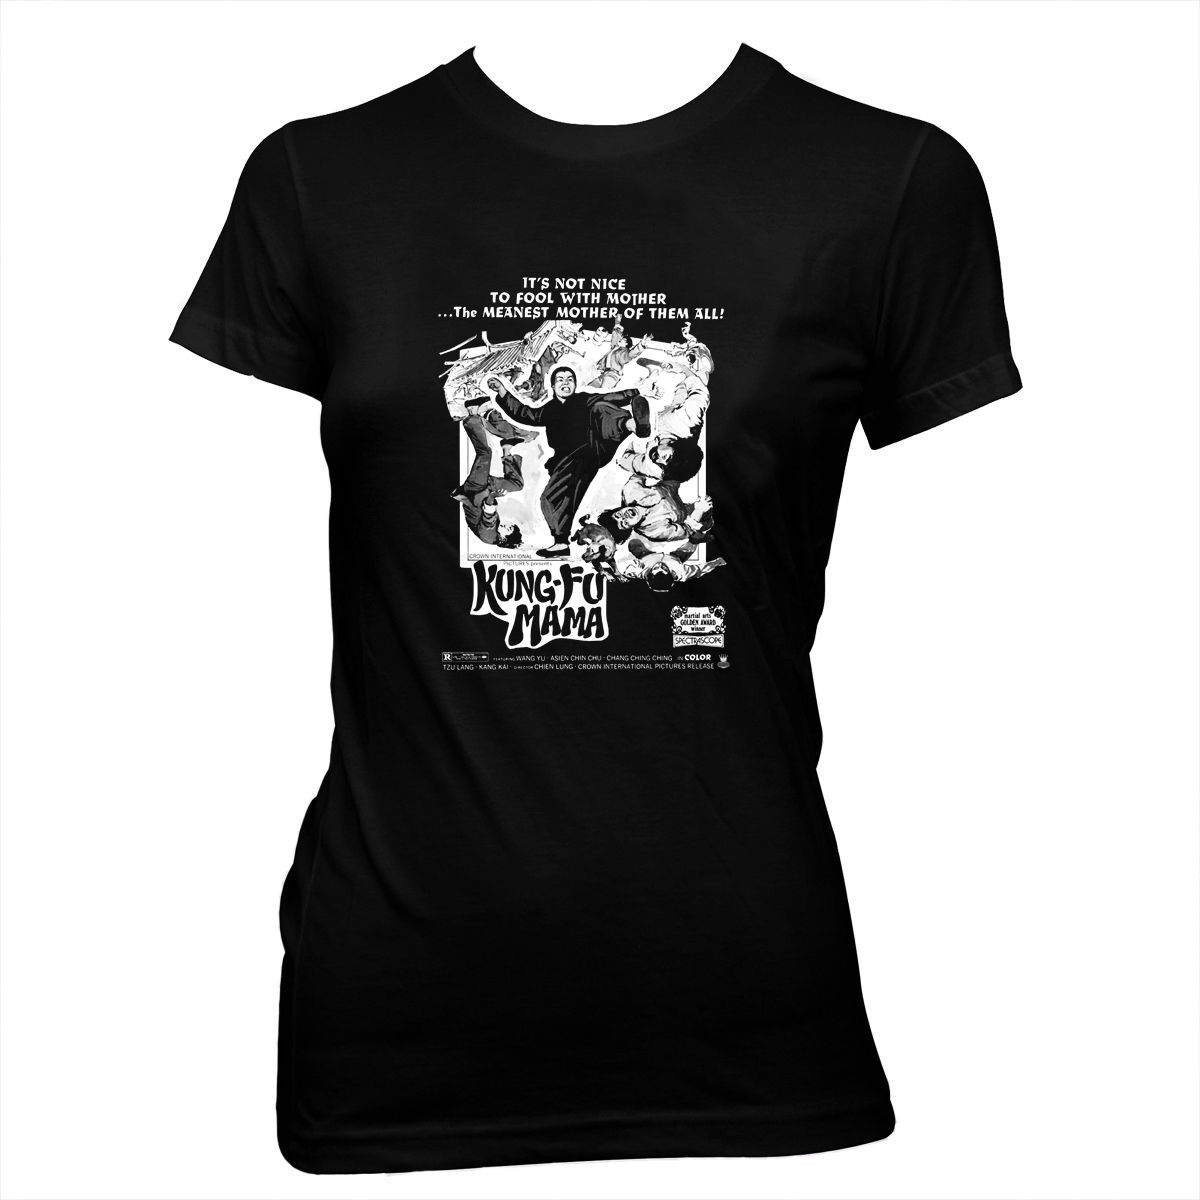 Kung Fu Mama (Shan dong lao niang) Women's 100% cotton babydoll t-shirt